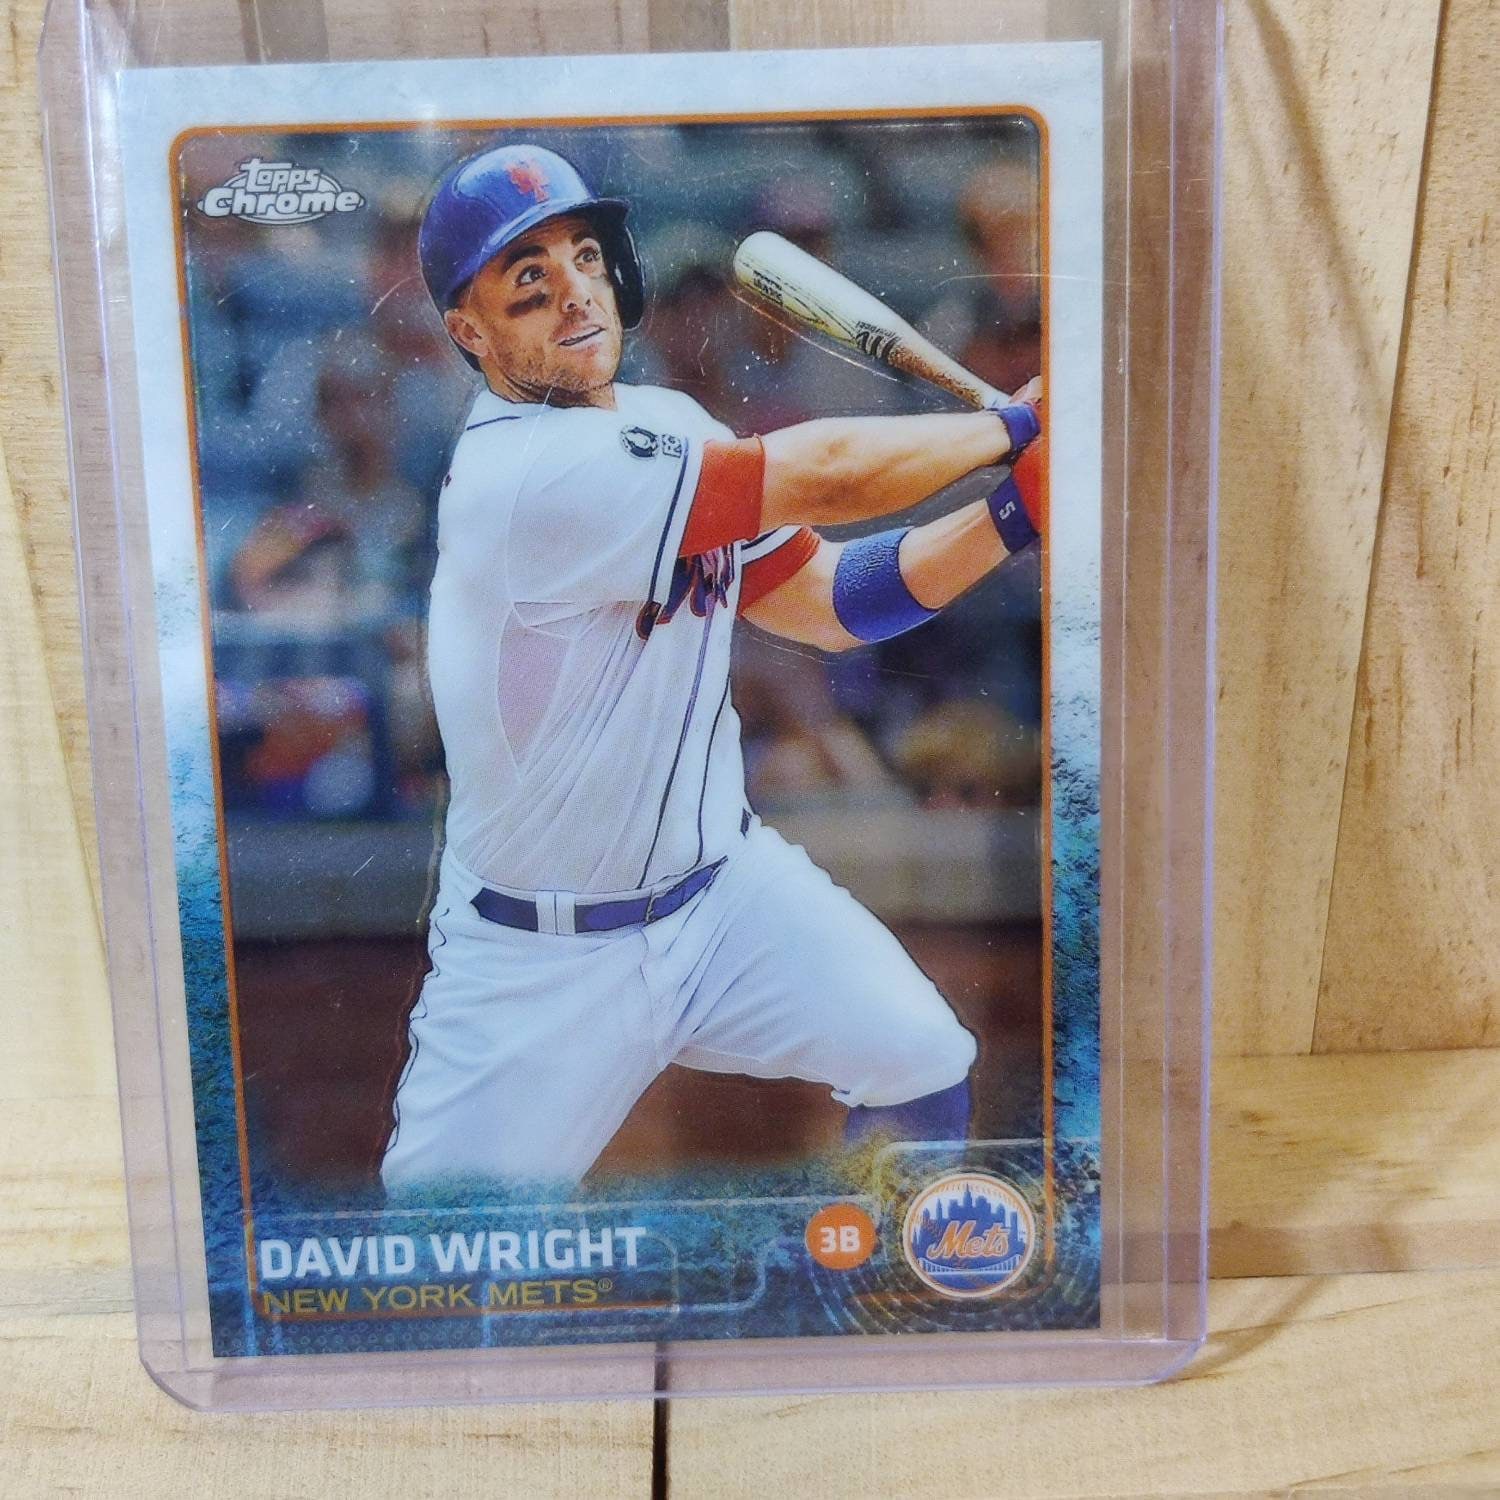 David Wright 2015 Topps Chrome Baseball Card New York Mets Star Player